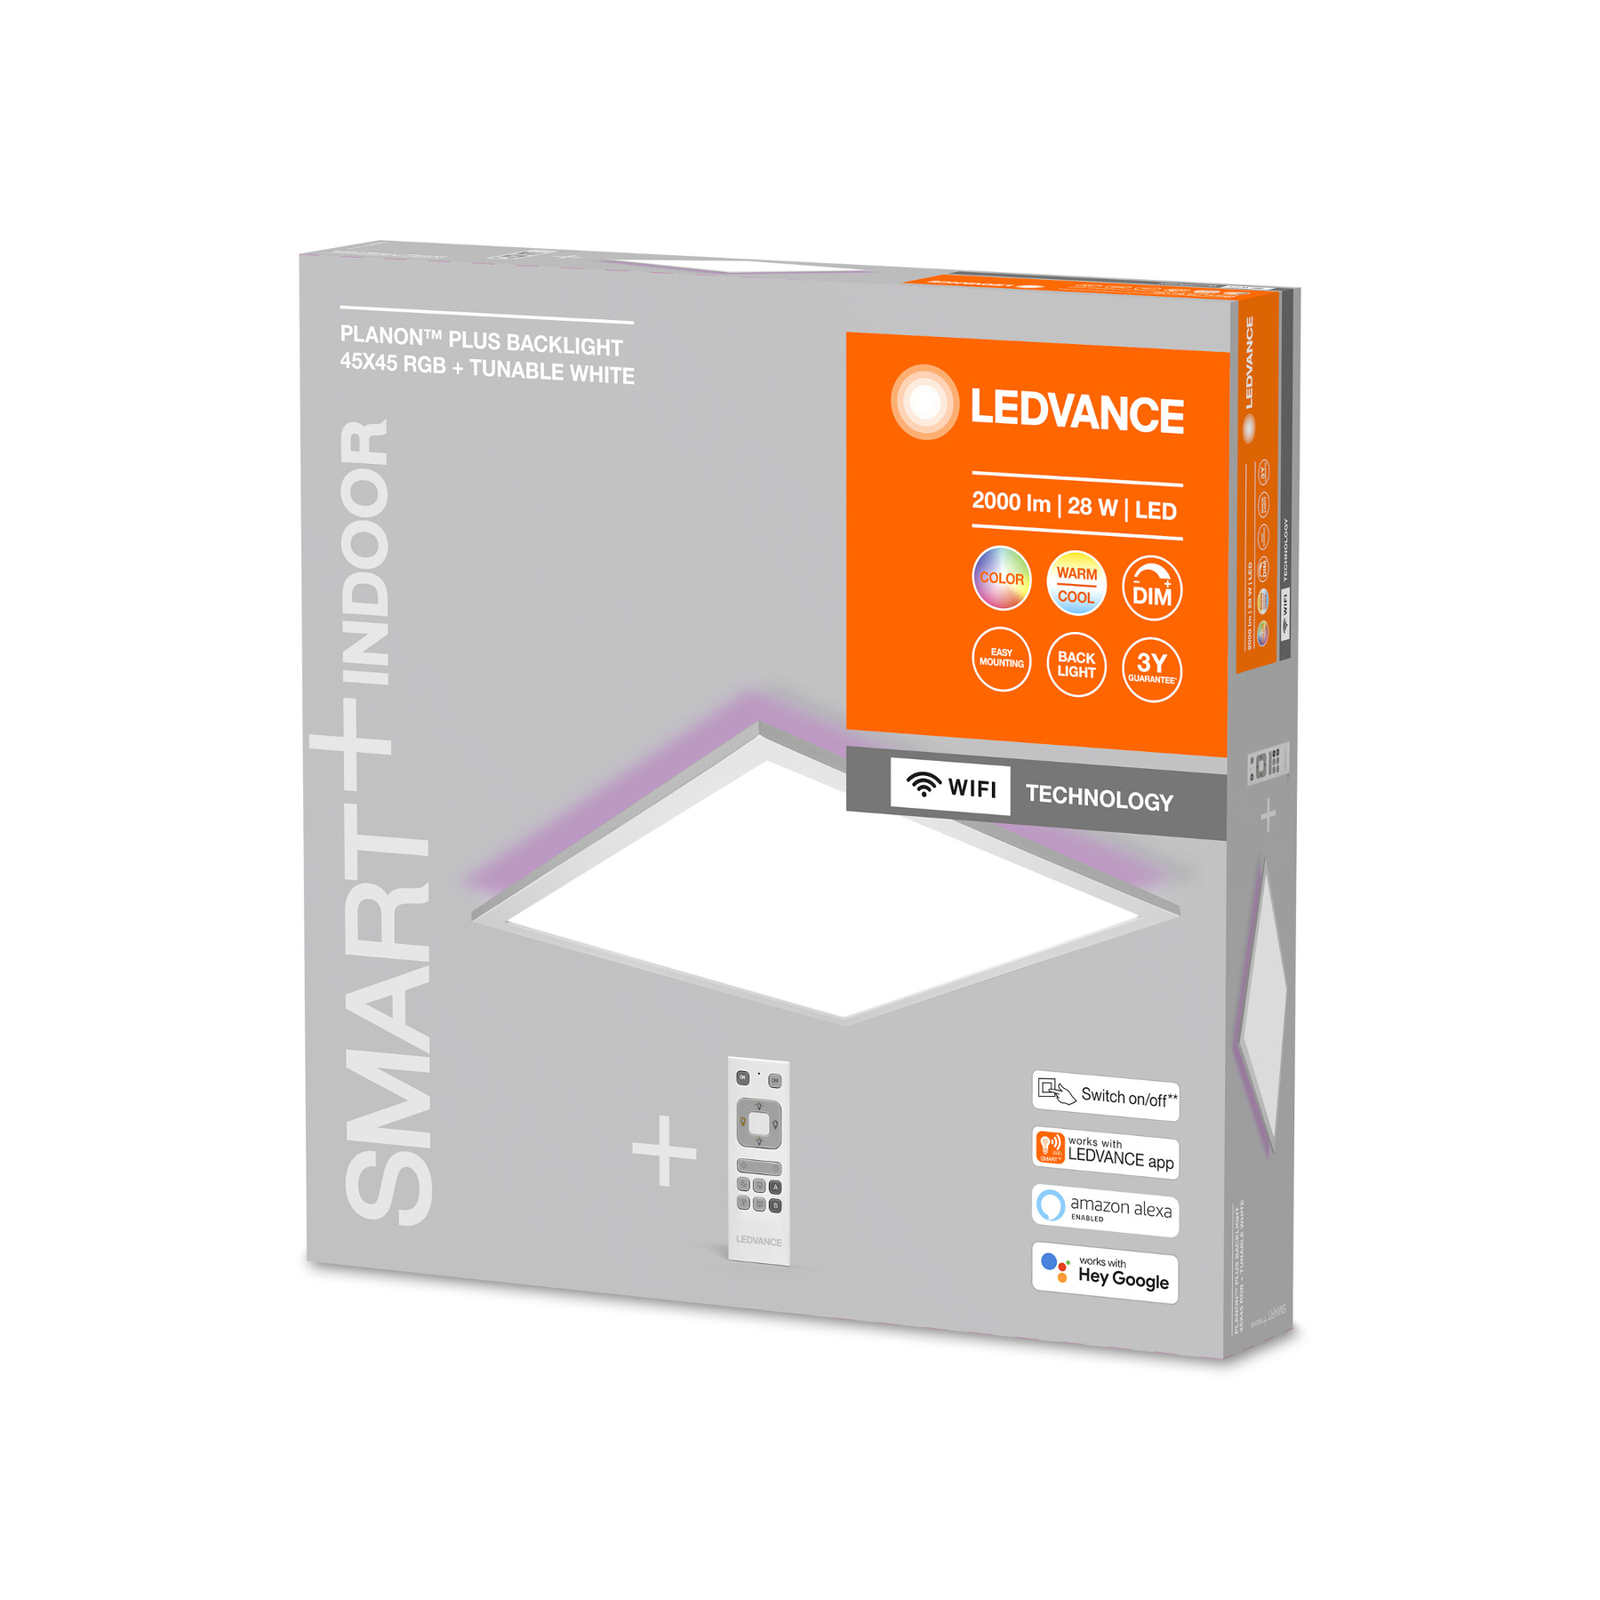 LEDVANCE SMART+ WiFi Planon Plus 45x45cm bianco